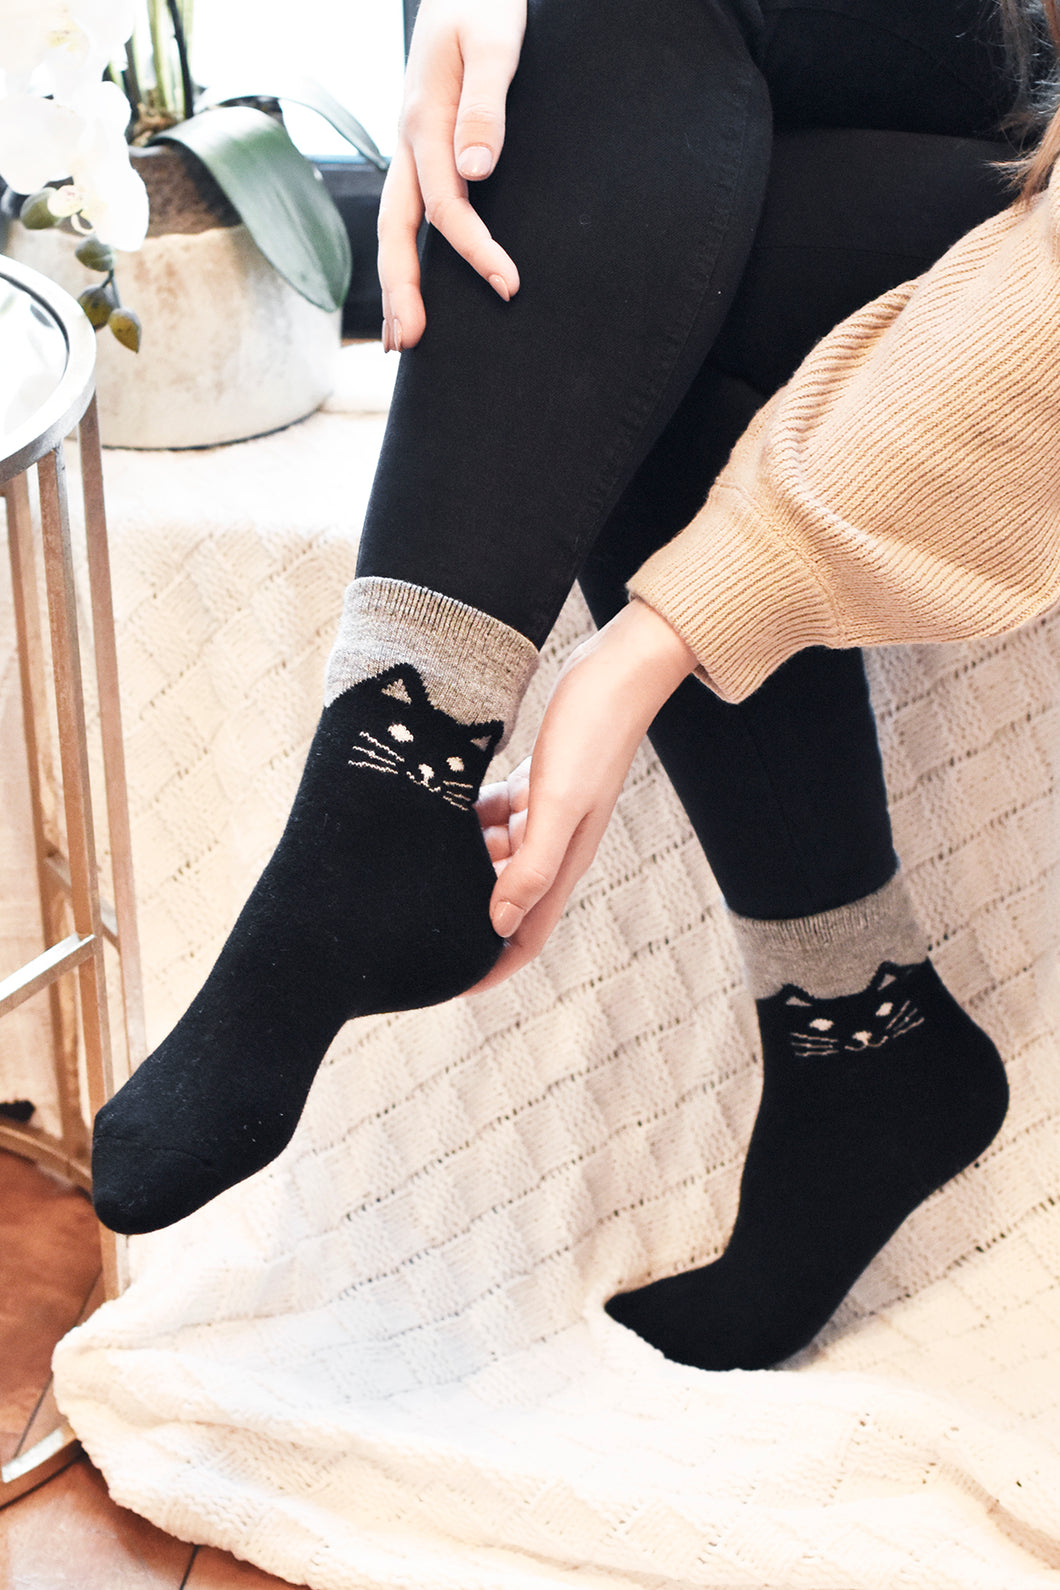 Cozy and Warm | Wool Socks | Black Cat